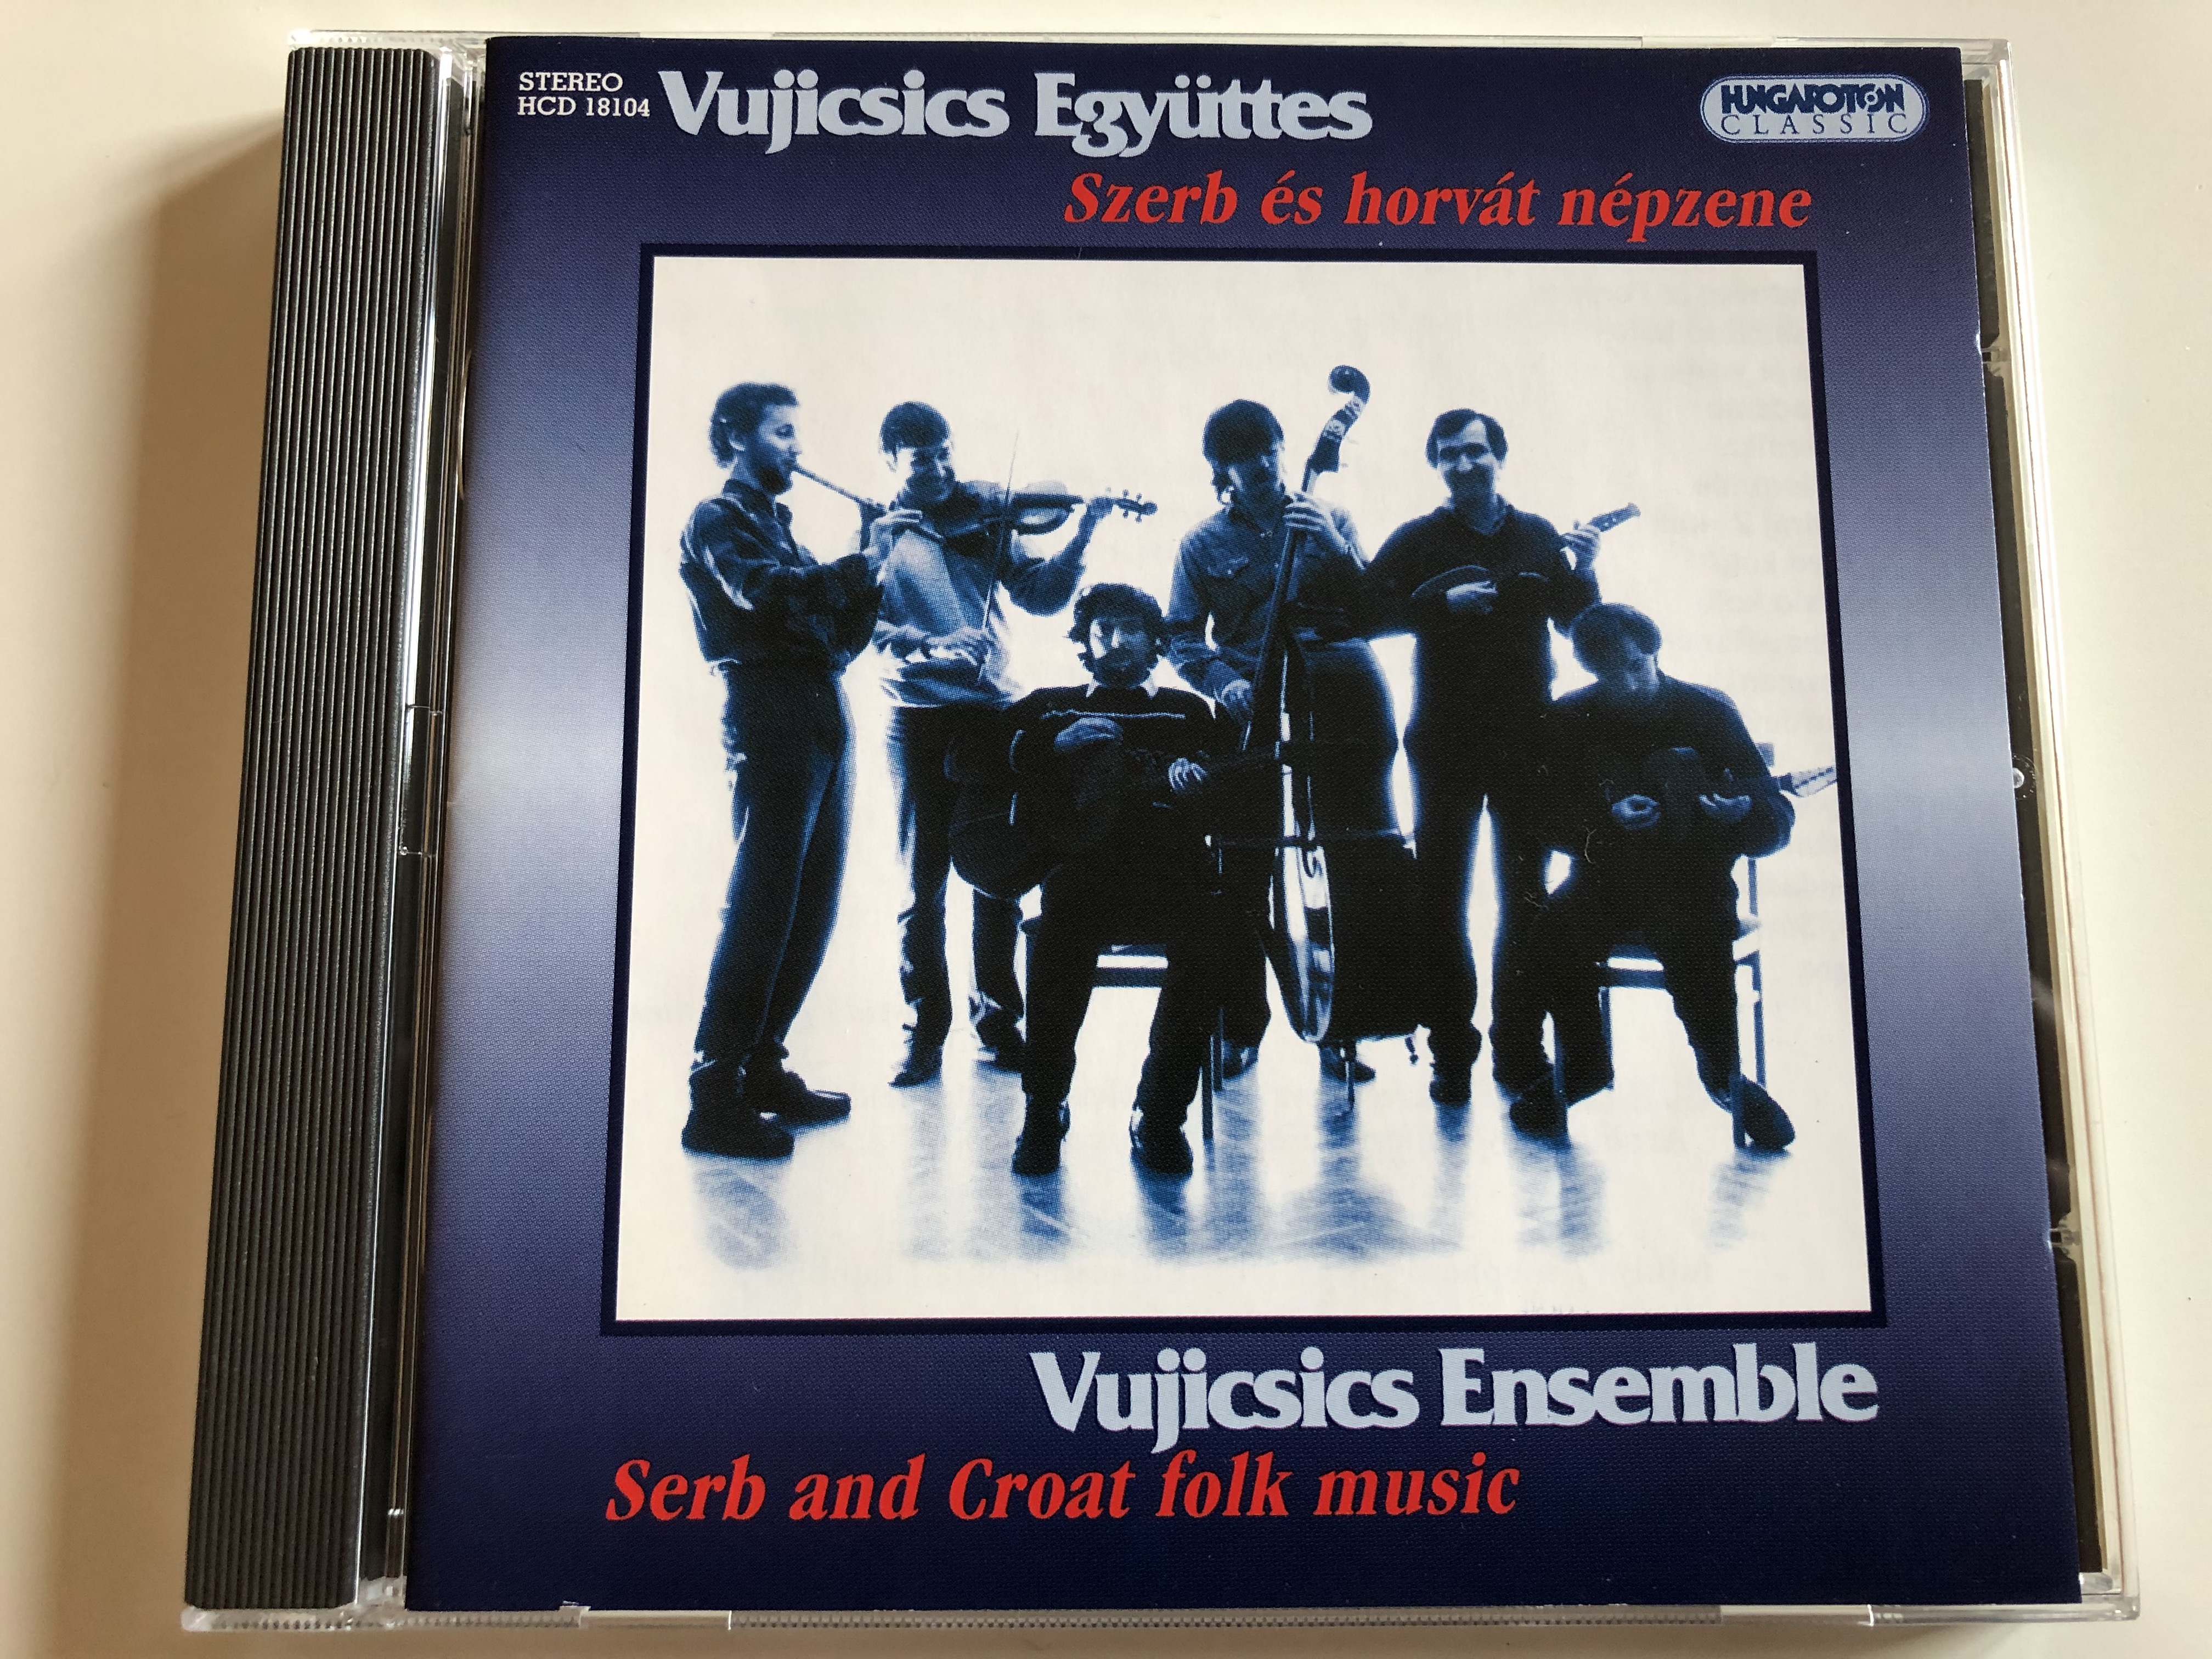 vujicsics-ensemble-szerb-s-horv-t-n-pzene-serb-and-croat-folk-music-hungaroton-classic-audio-cd-2005-stereo-hcd-18104-1-.jpg